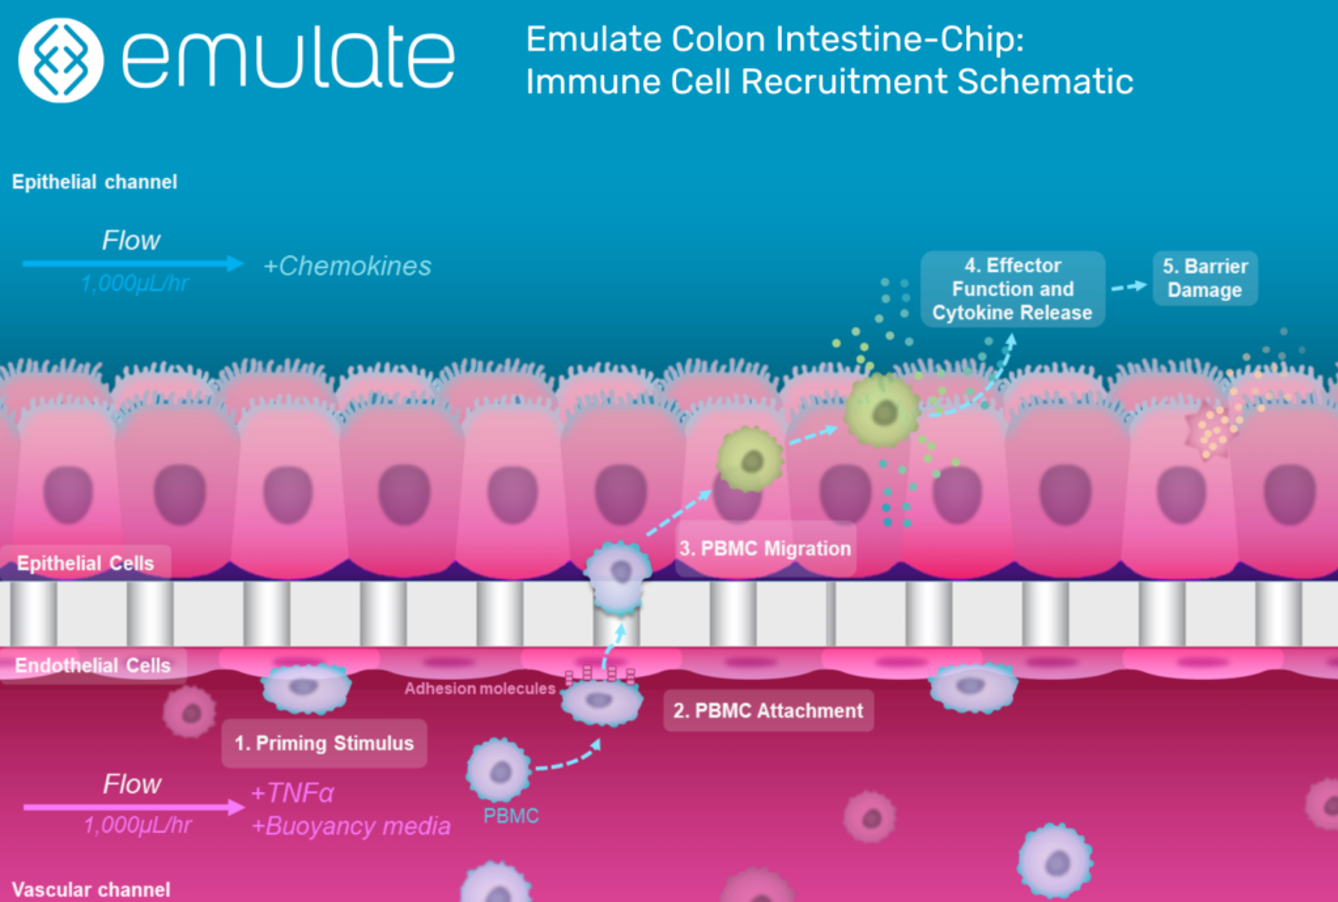 Illustration of Immune Cell Recruitment in the Colon Intestine-Chip